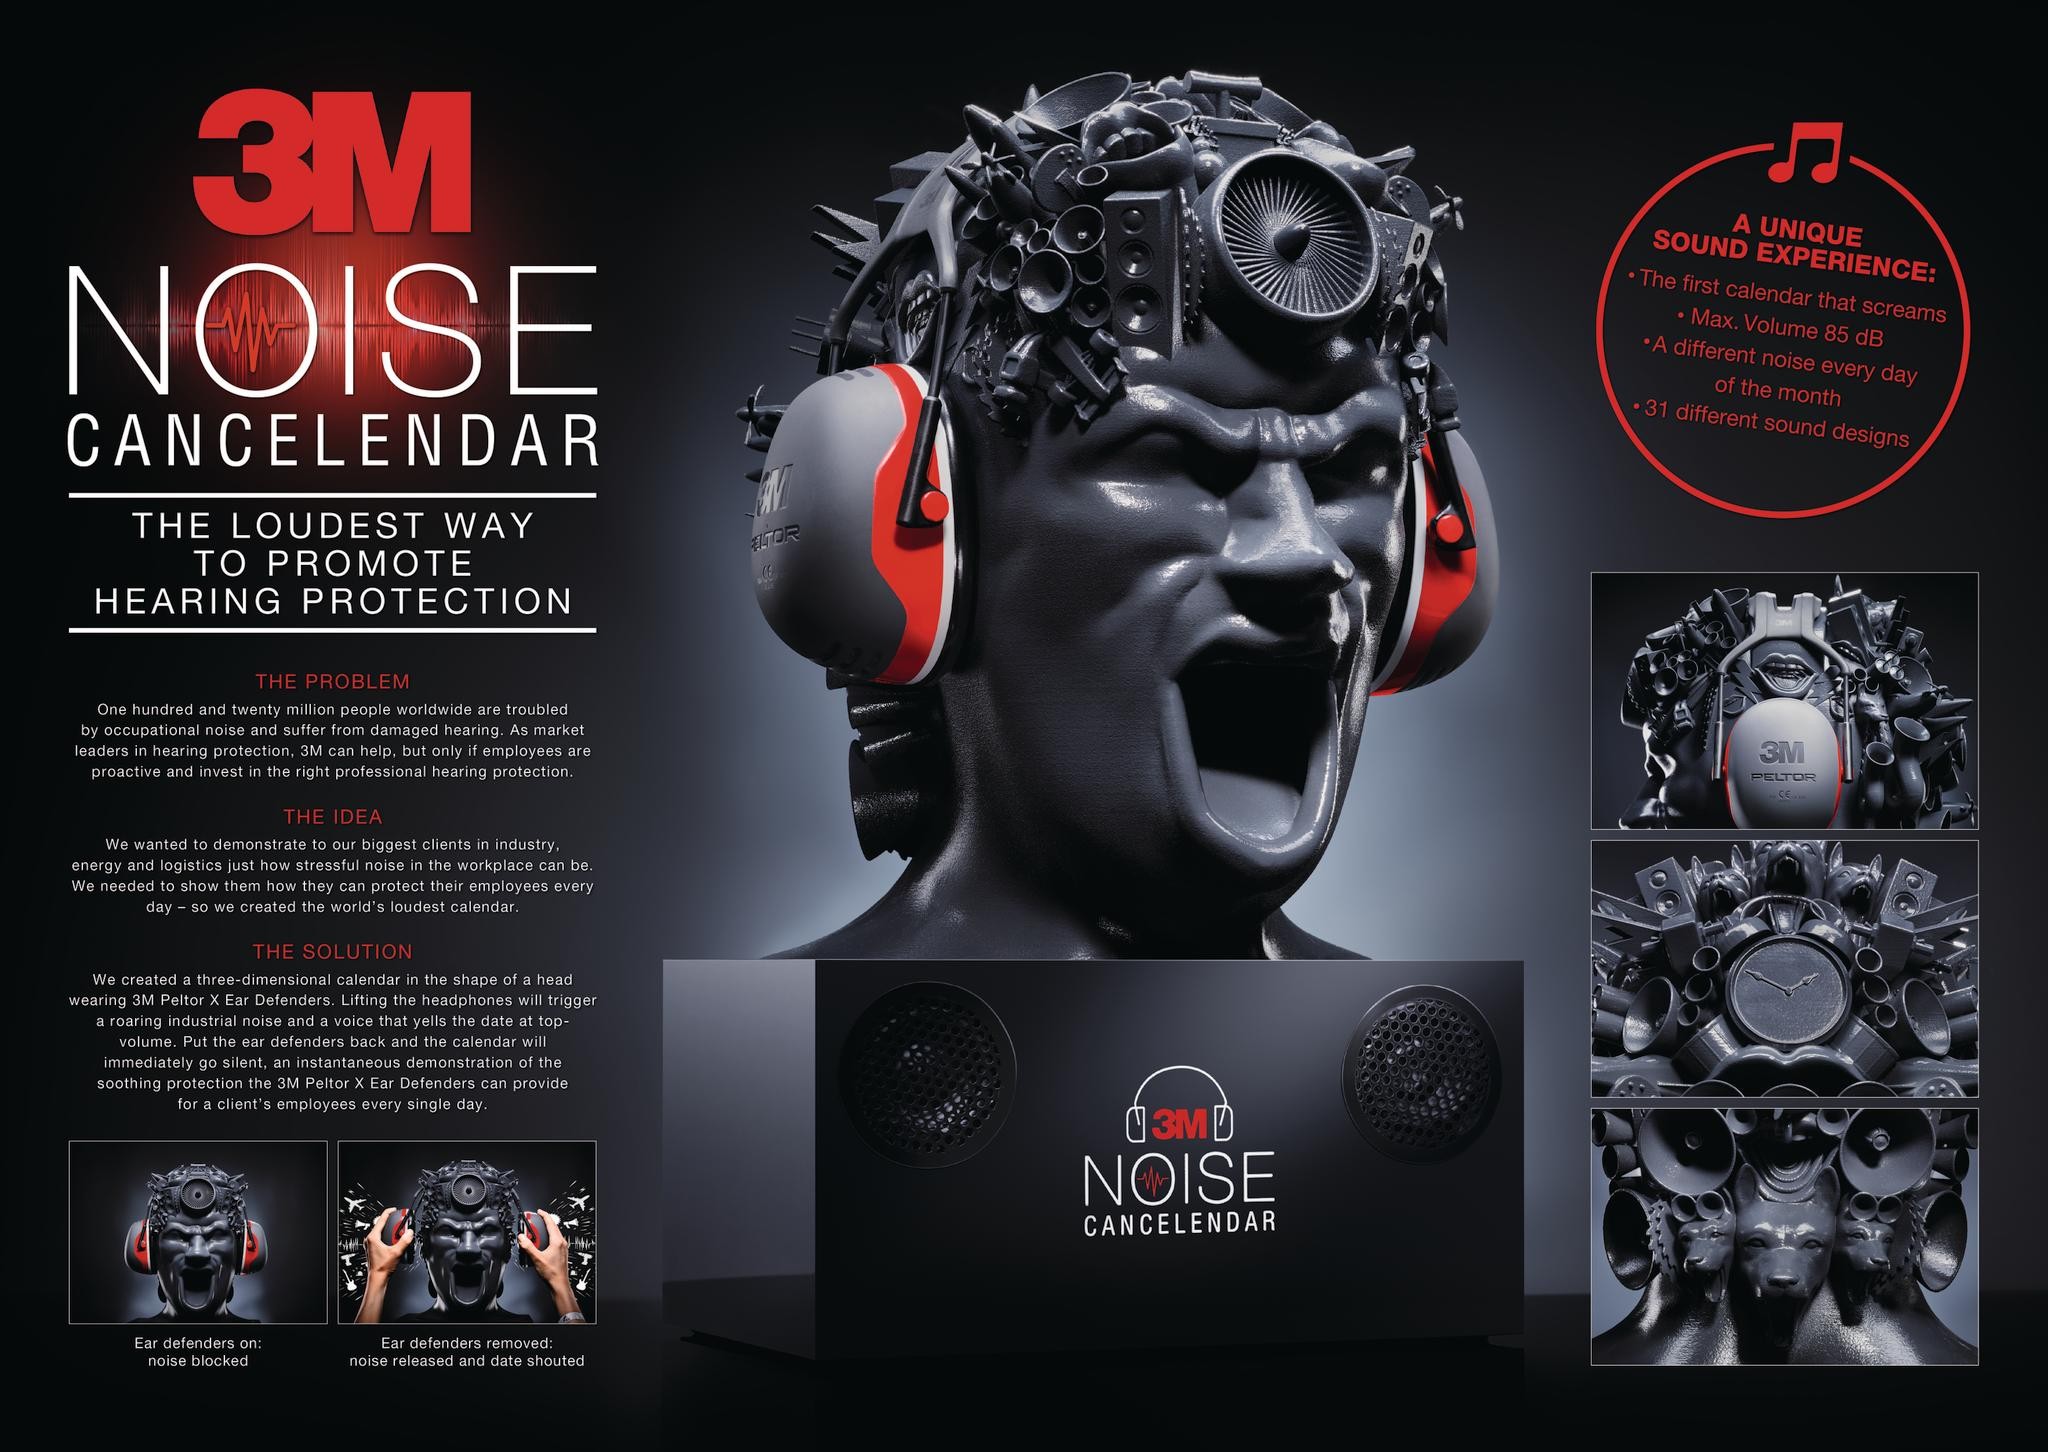 3M Noise Cancelendar